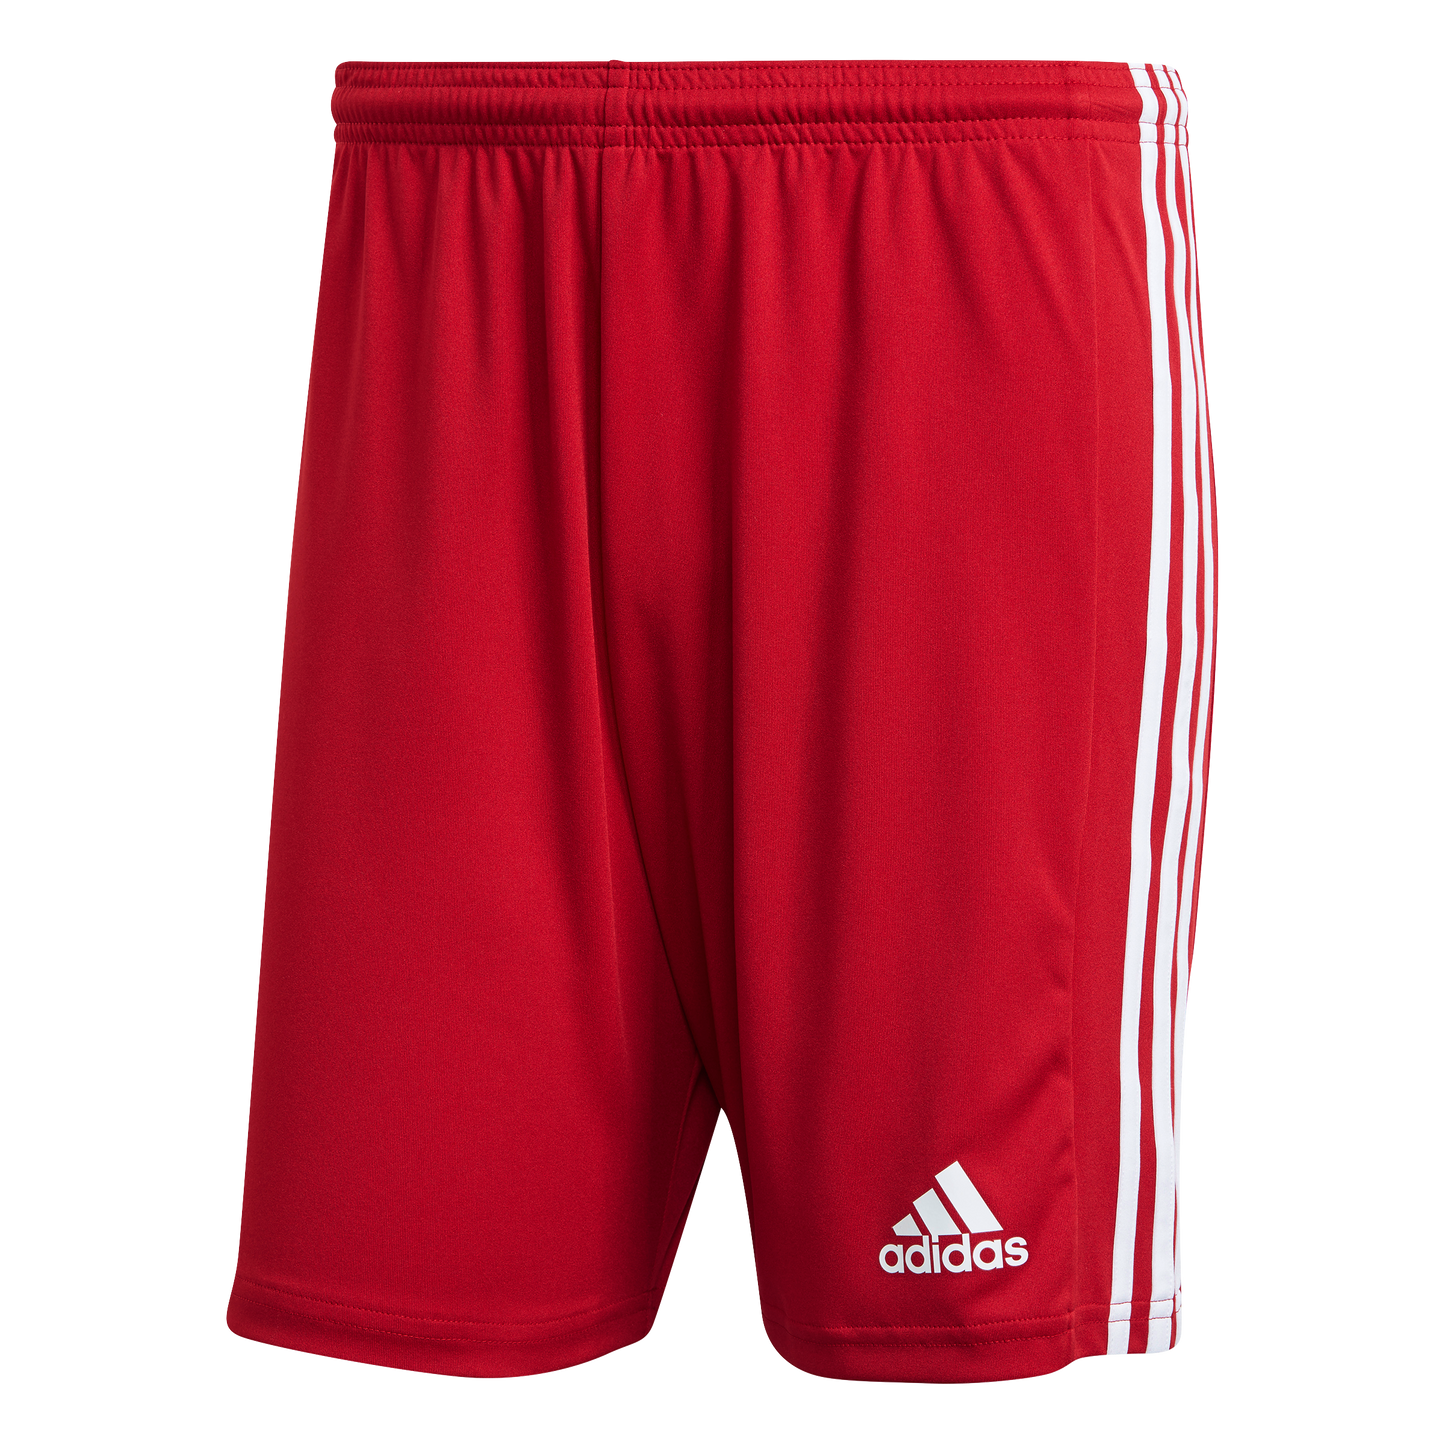 adidas Men's Squadra 21 Soccer Shorts Red